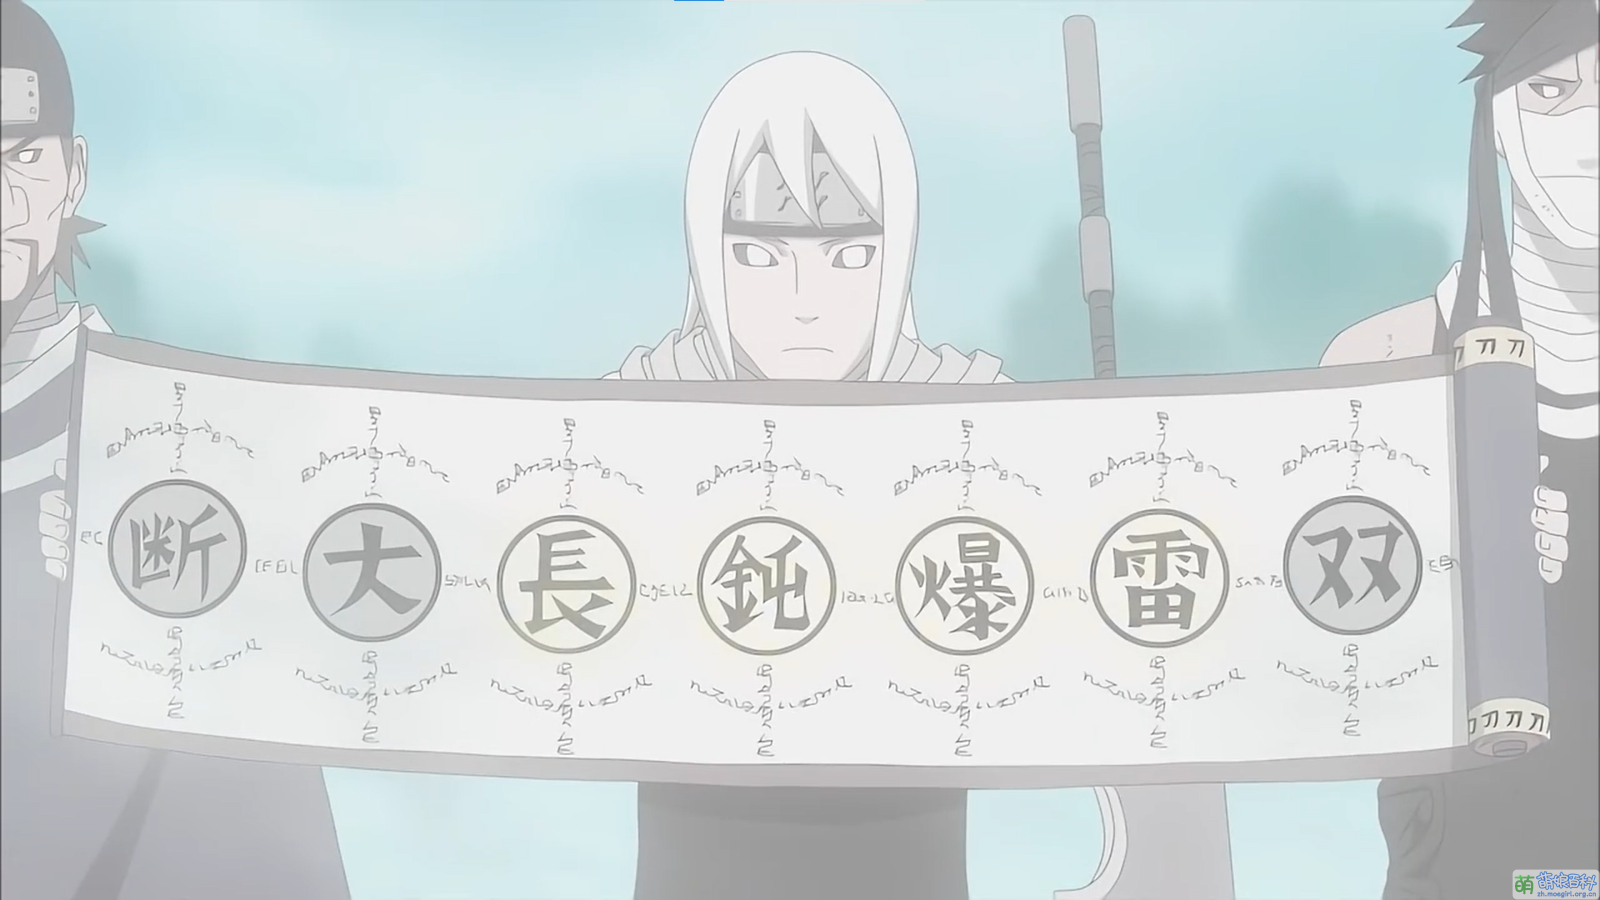 Seven Ninja Swordsmen of the Mist - Narutopedia, the Naruto ...